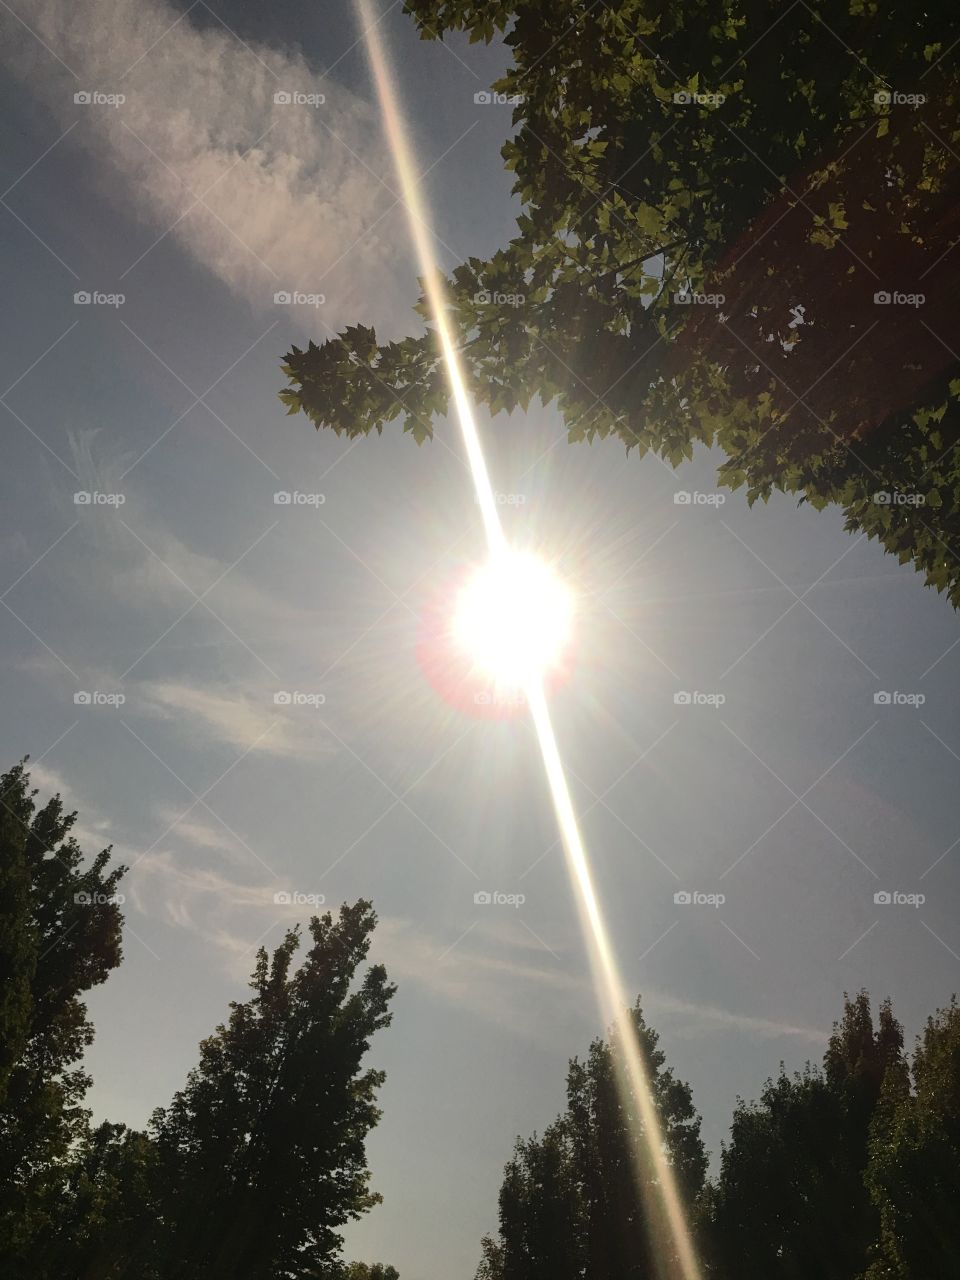 Sun Ray 3 Eclipse 2017